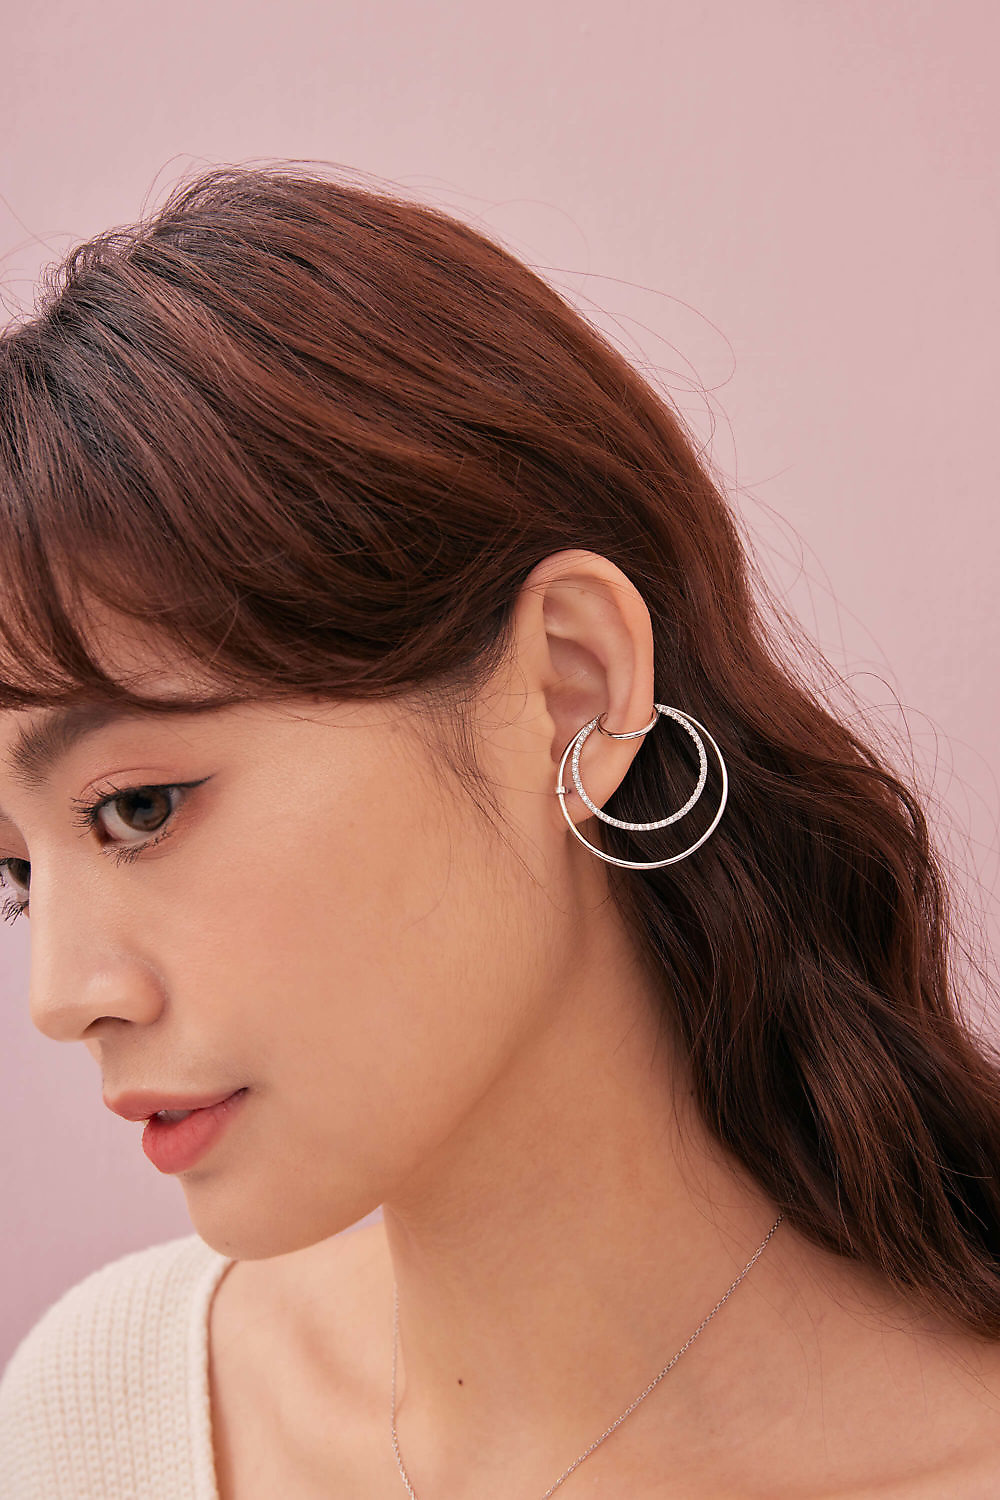 Eco安珂,韓國飾品,韓國耳環,耳針式耳環,耳骨耳環,大圈耳環,大耳環,貼耳耳環,鑲鑽耳環,不對稱耳環